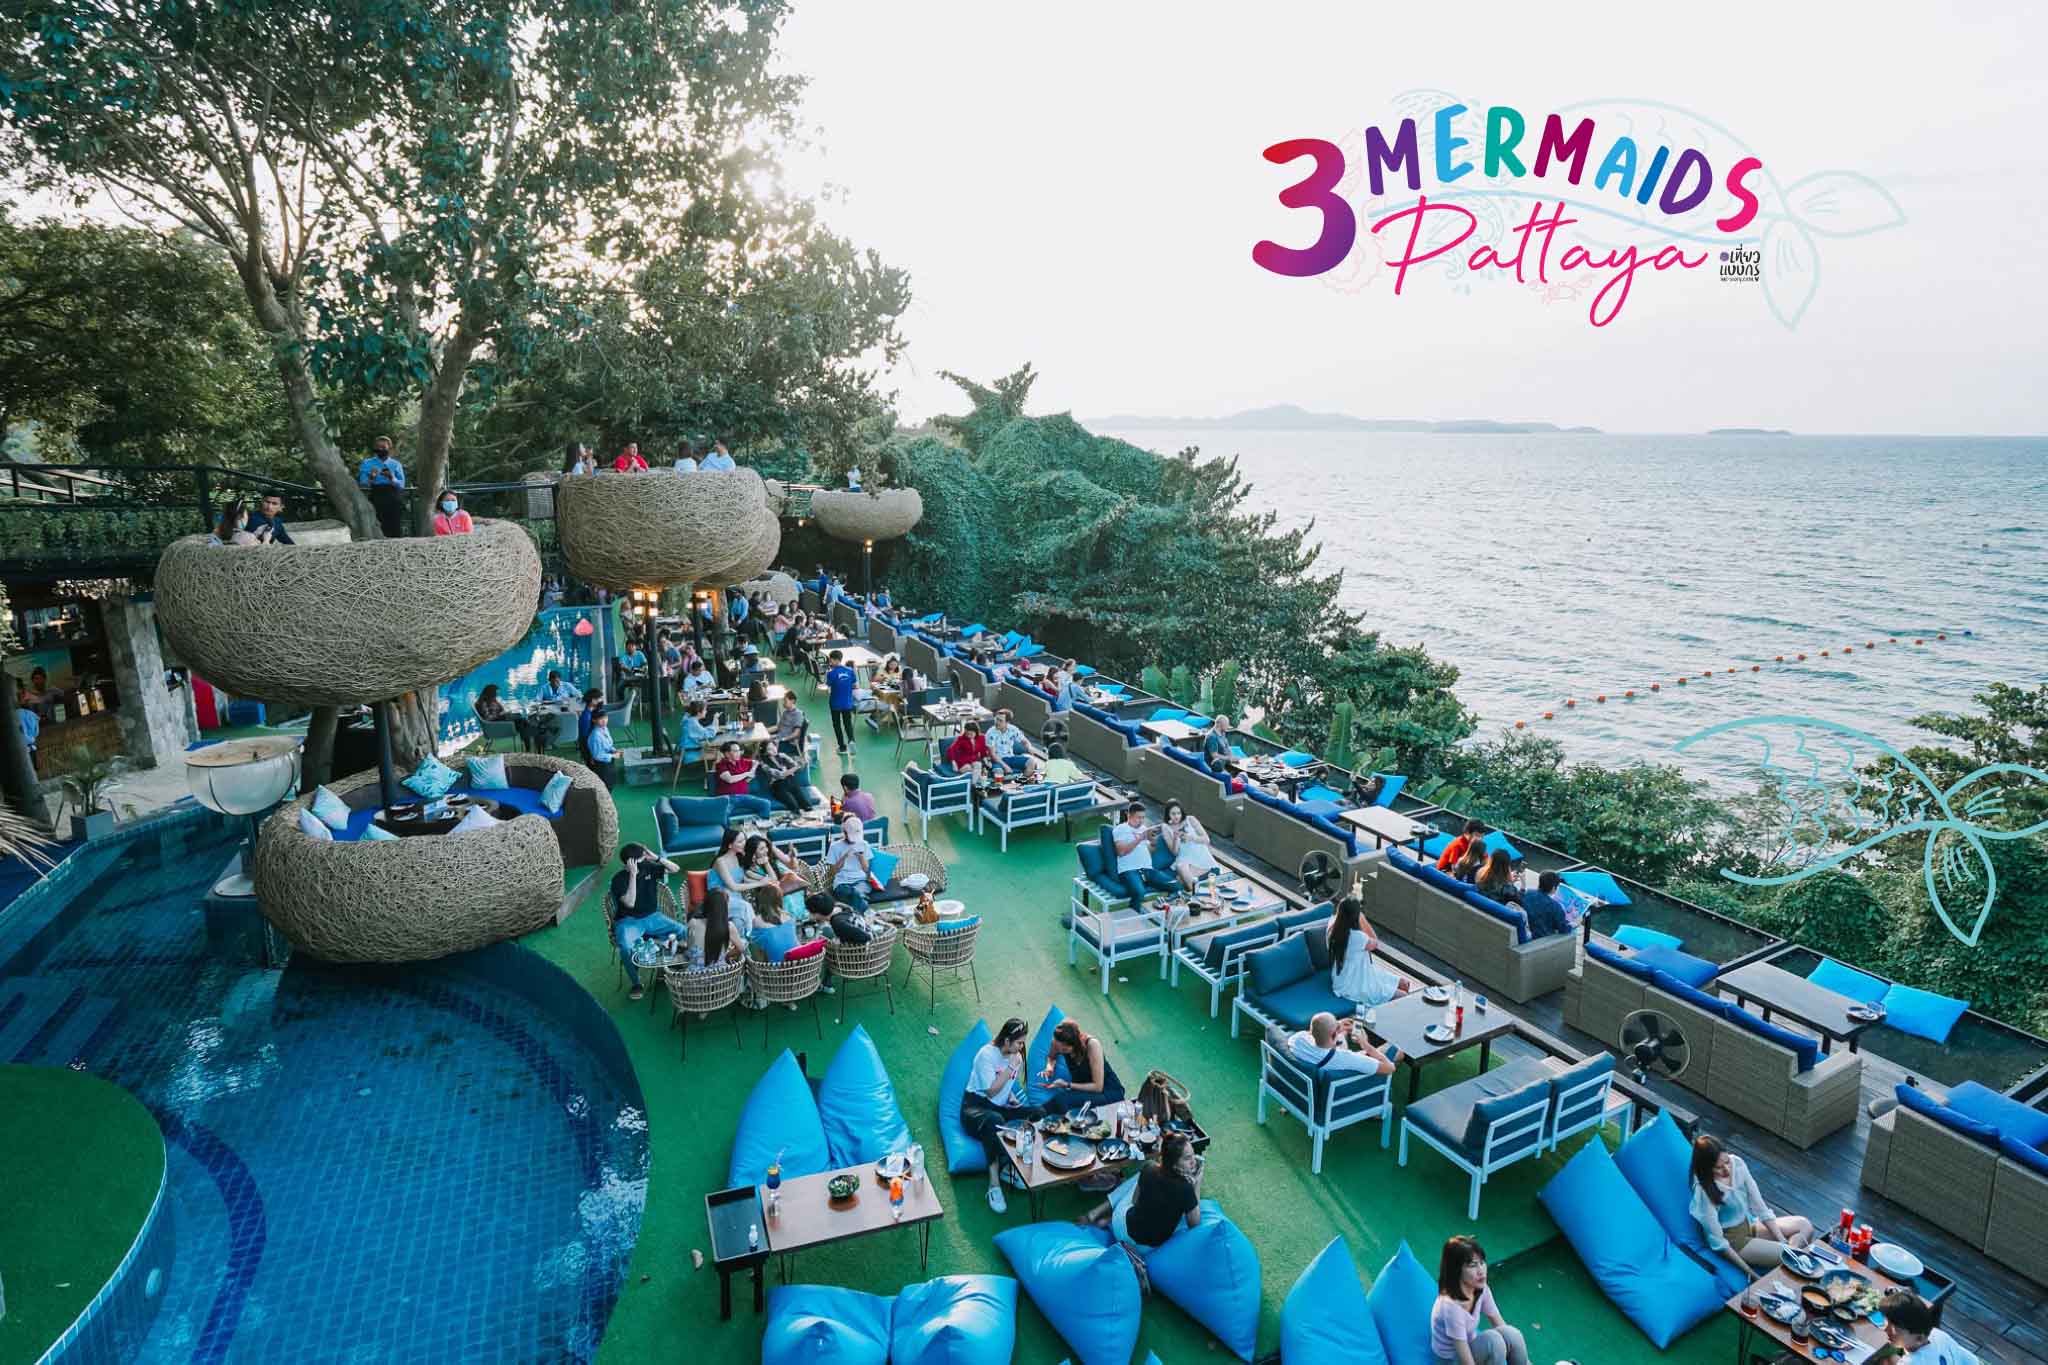 3 Mermaids Cafe Pattaya – Me Story